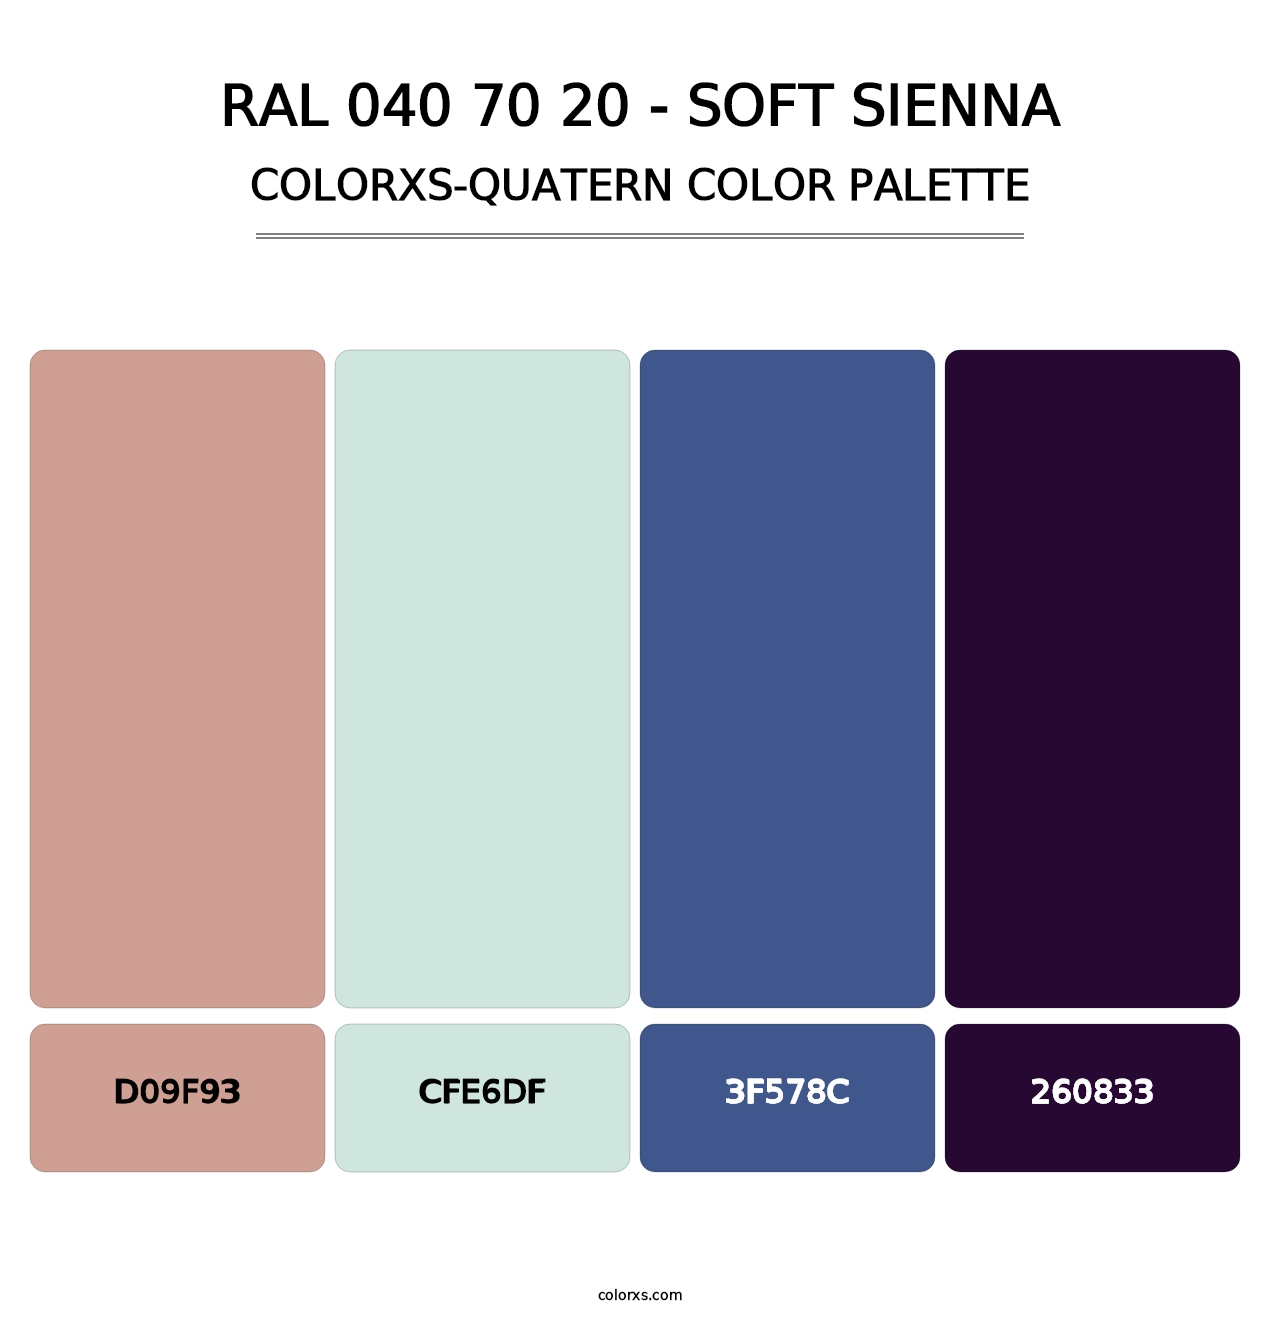 RAL 040 70 20 - Soft Sienna - Colorxs Quatern Palette